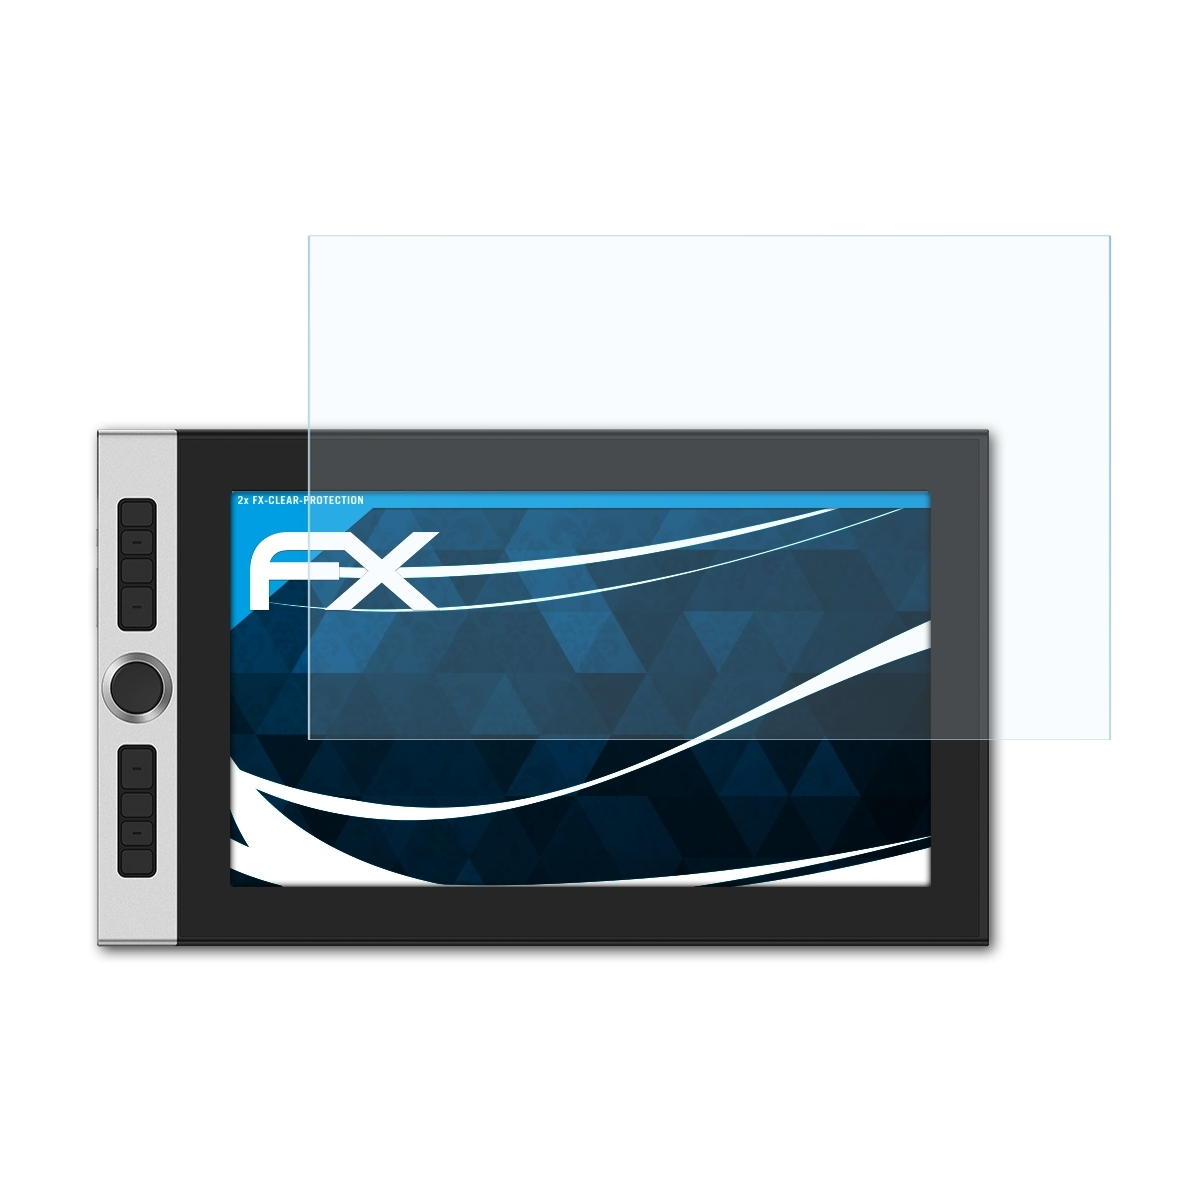 ATFOLIX 2x FX-Clear Innovator 16) Displayschutz(für XP-PEN